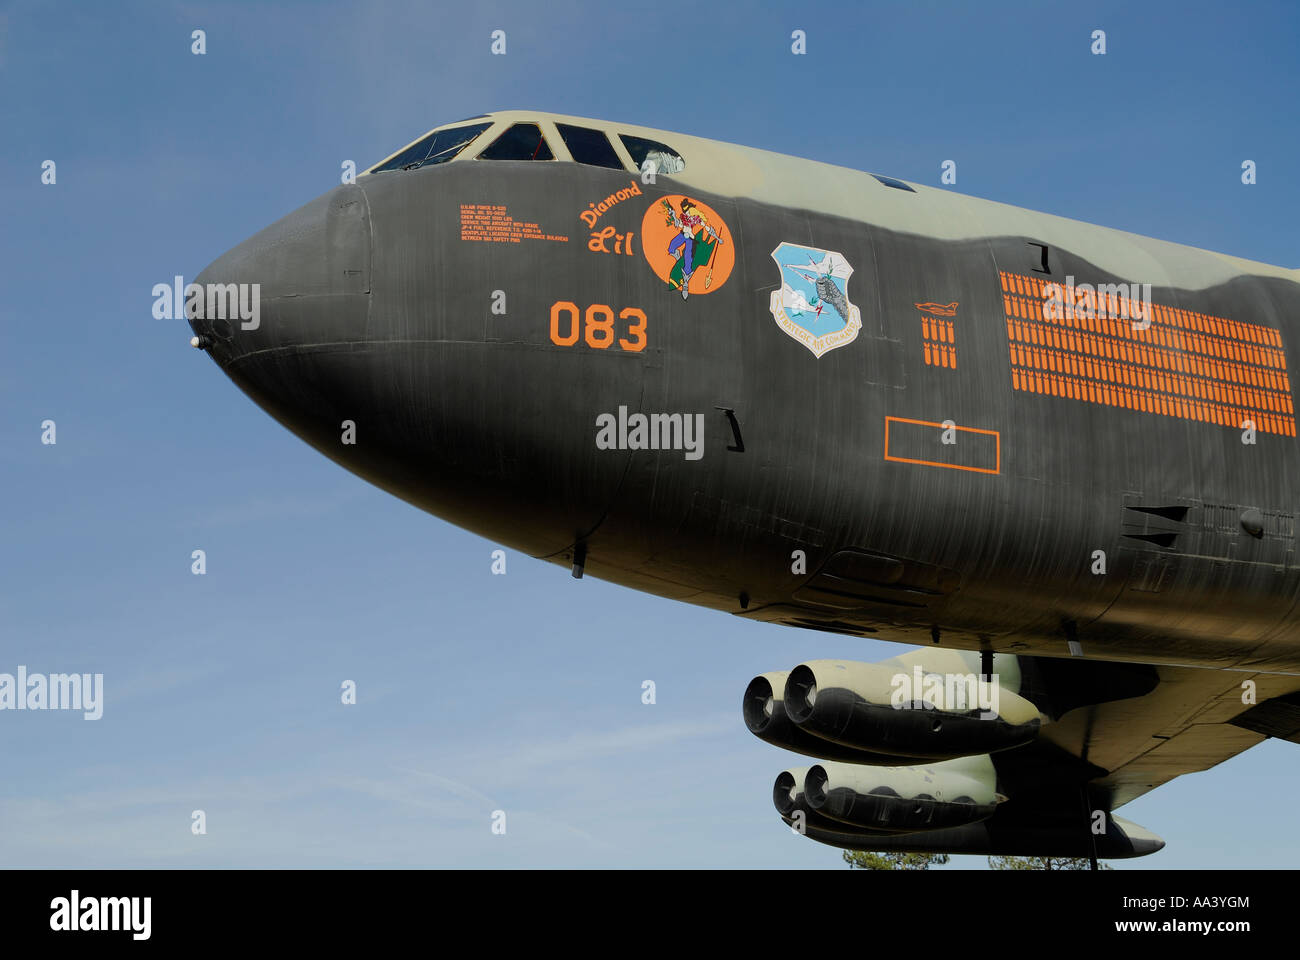 Der B52-Bomber auf dem Display an der US Air Force Academy in Colorado Springs, Colorado. Stockfoto